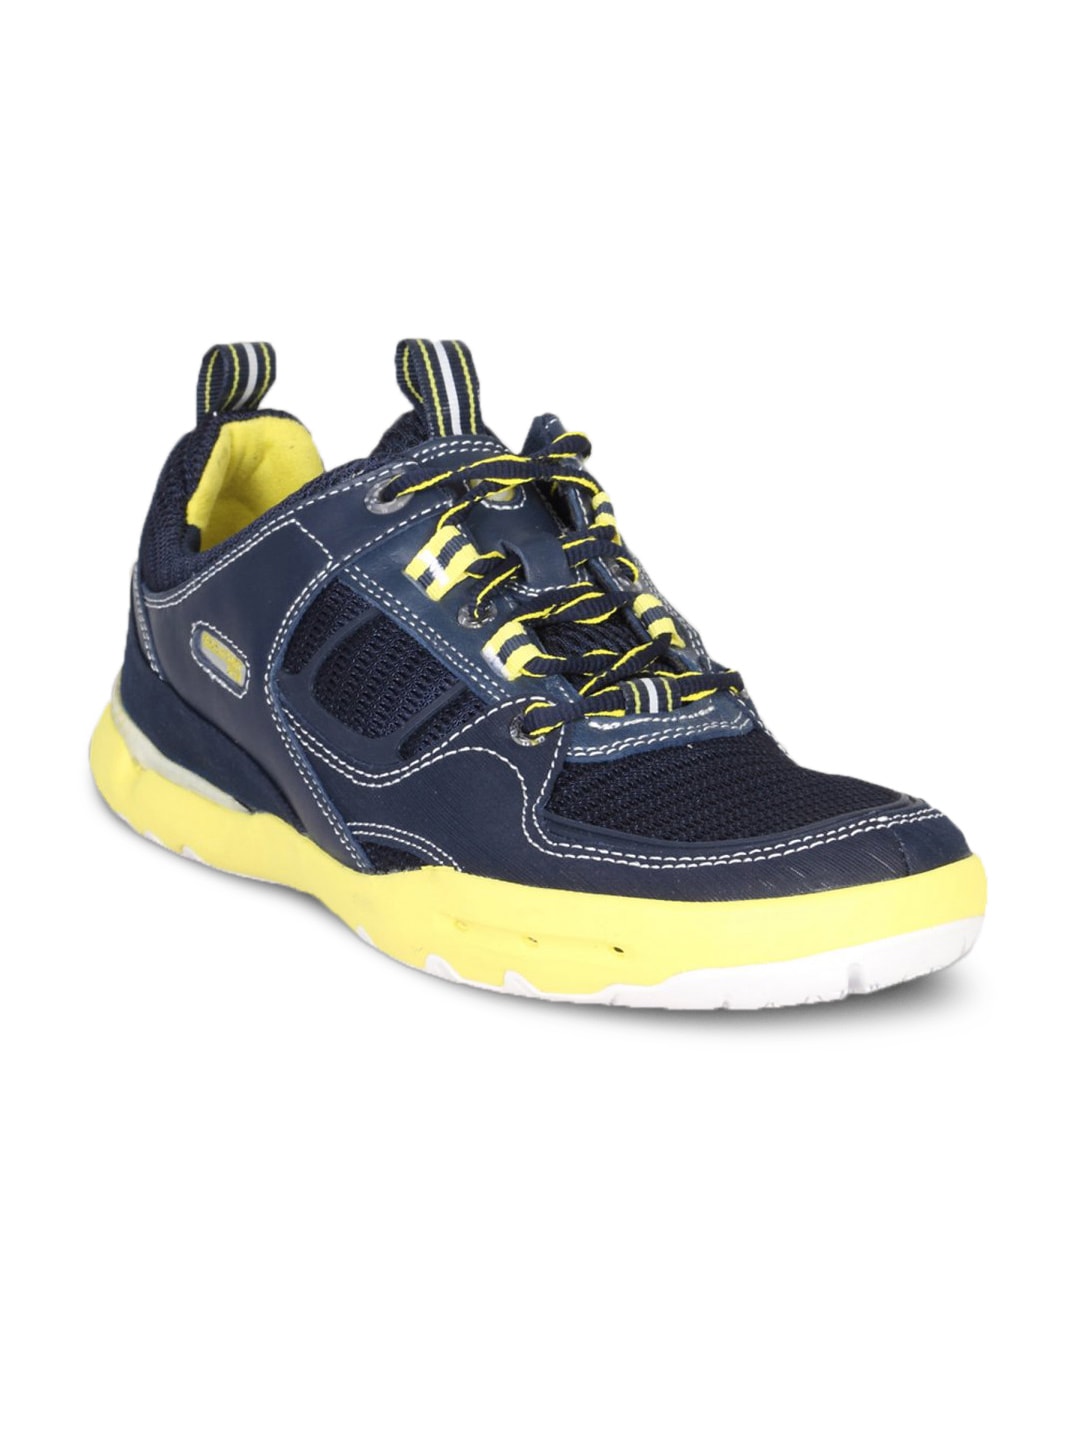 Rockport Men's Hydro Sail Navy Blue Yellow Shoe